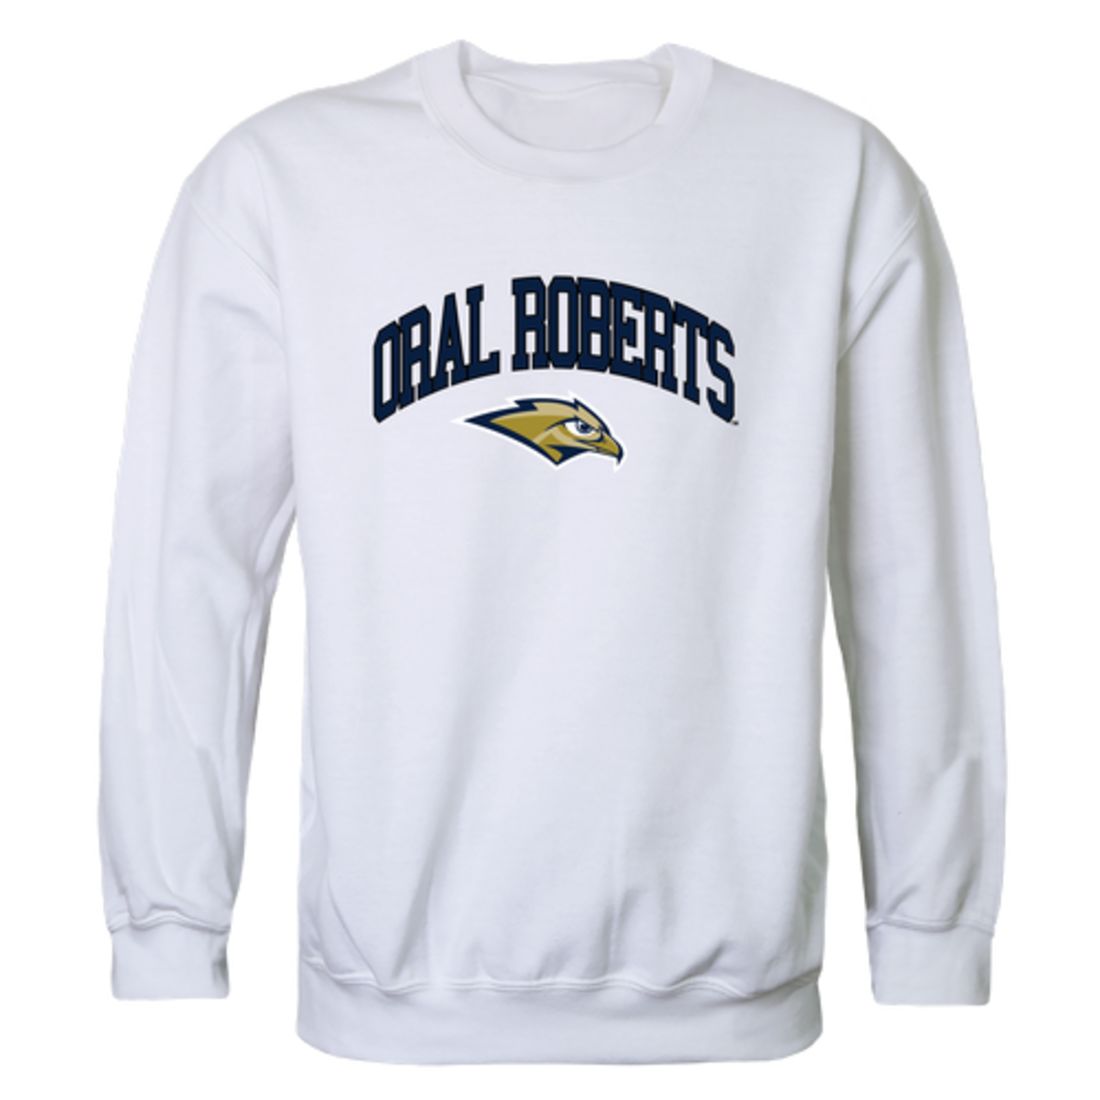 Oral-Roberts-University-Golden-Eagles-Campus-Fleece-Crewneck-Pullover-Sweatshirt